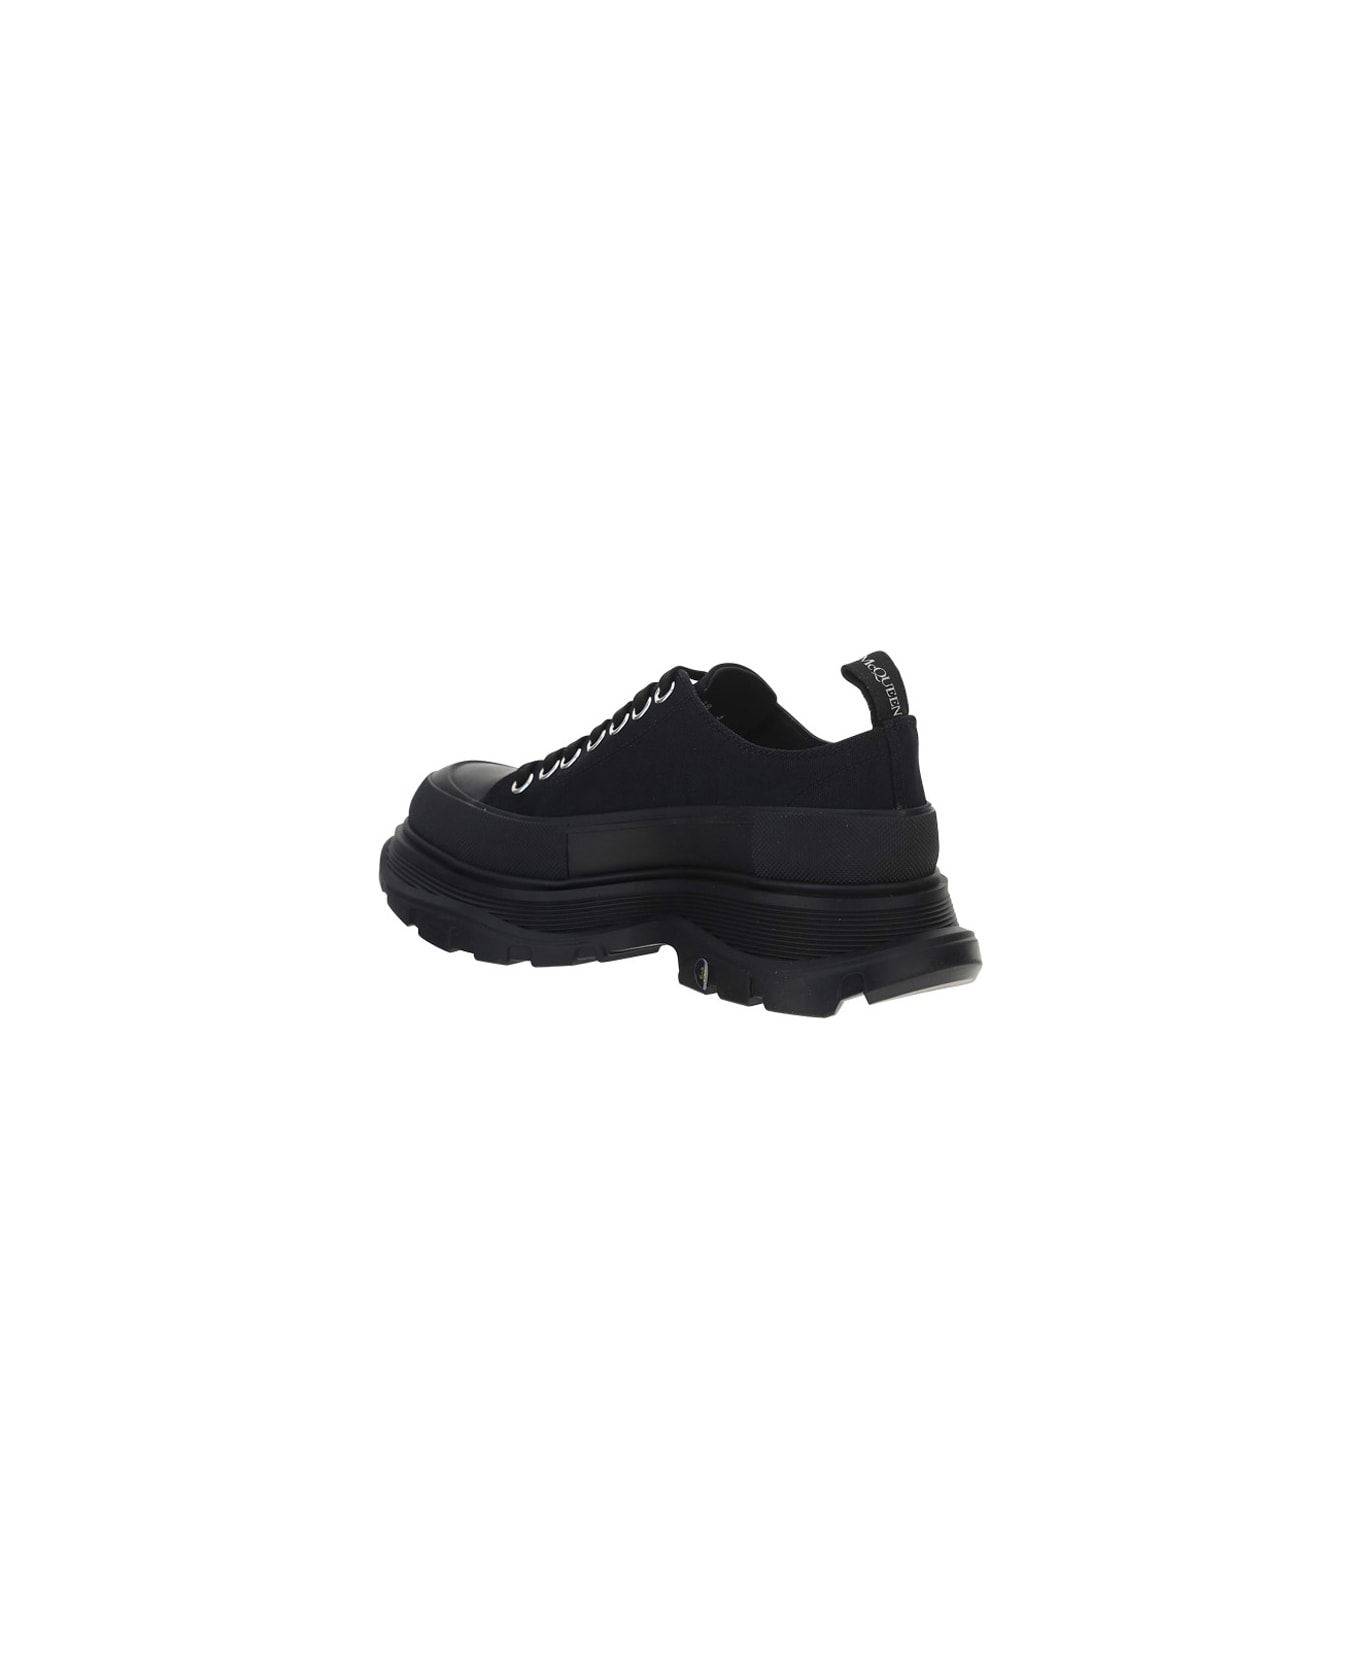 Alexander McQueen Tread Slick Laced Up Shoes - Black/black スニーカー